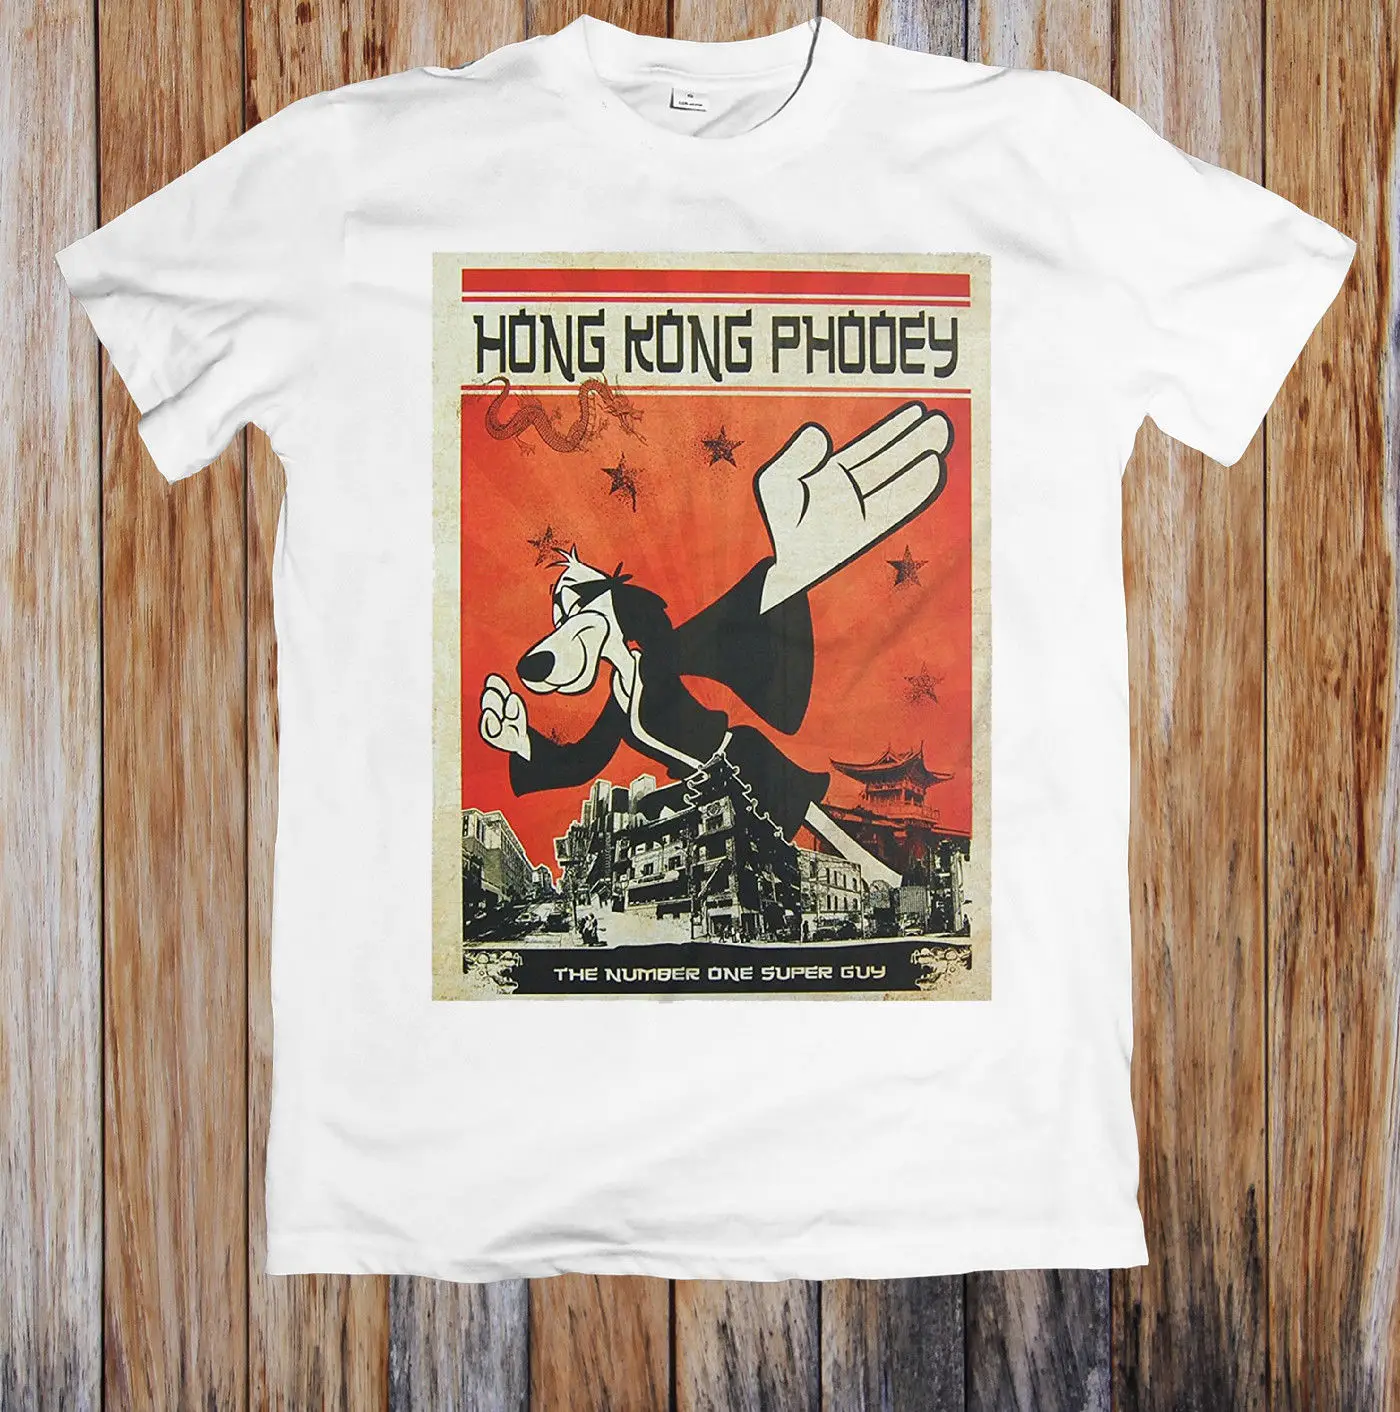 HONG KONG PHOOEY/футболка унисекс с героями мультфильмов в стиле ретро, футболка с героями мультфильмов, Мужская футболка унисекс, новая модная